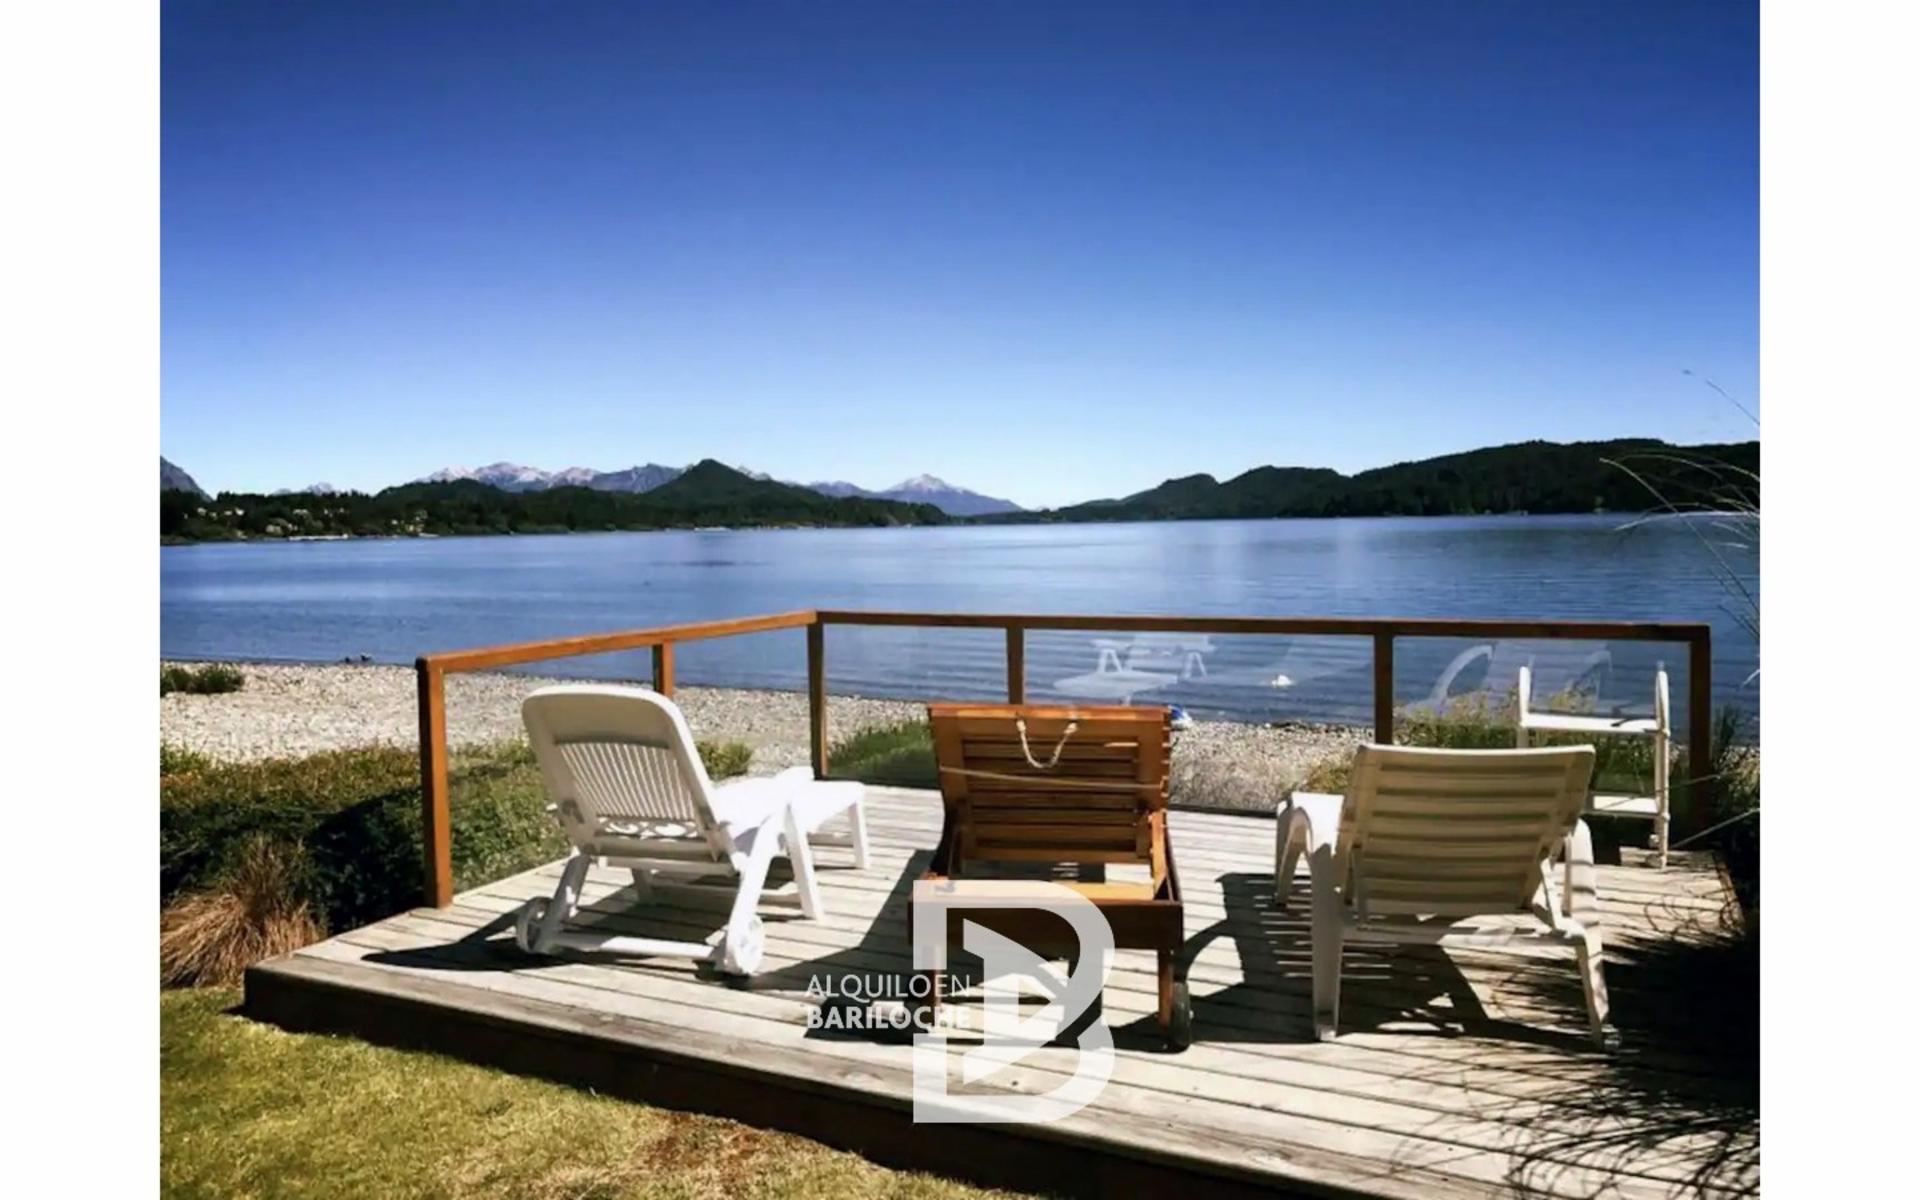 Alquiler Casa en Bariloche con Costa de Lago Nahuel Huapi. 9 PAX. Km11.